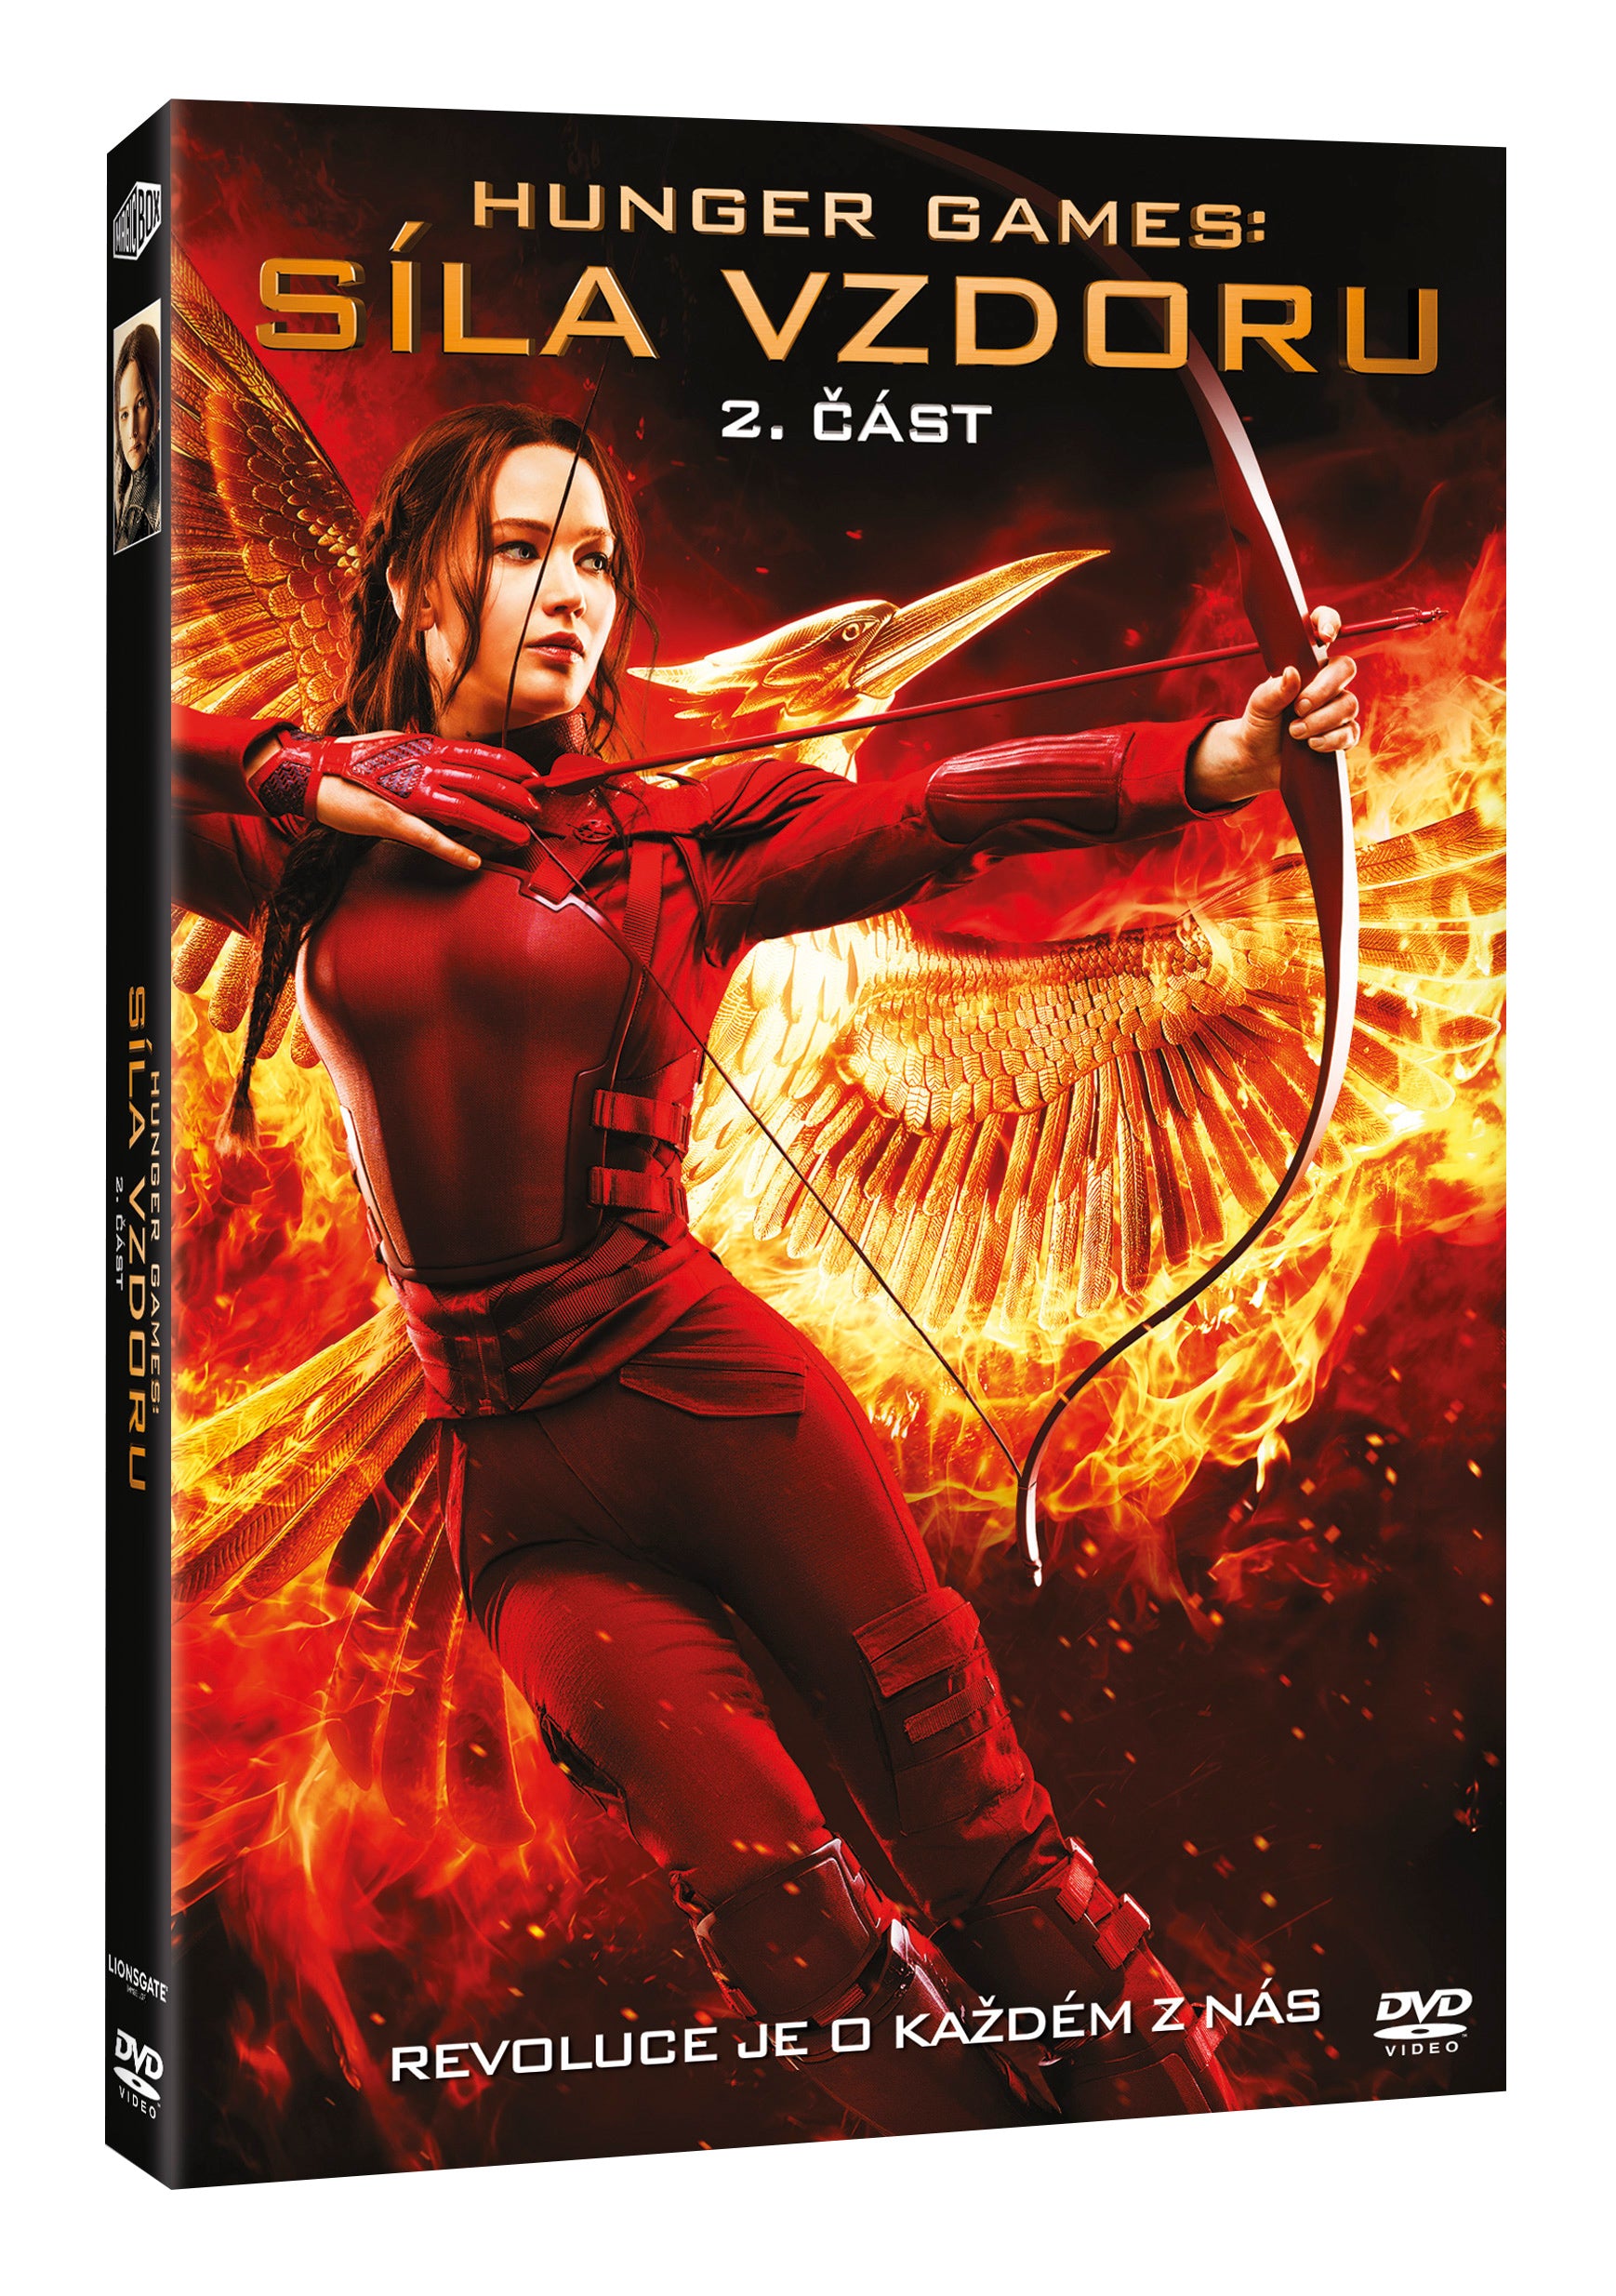 Hunger Games: Sila vzdoru 2. cast DVD / The Hunger Games: Mockingjay - Part 2